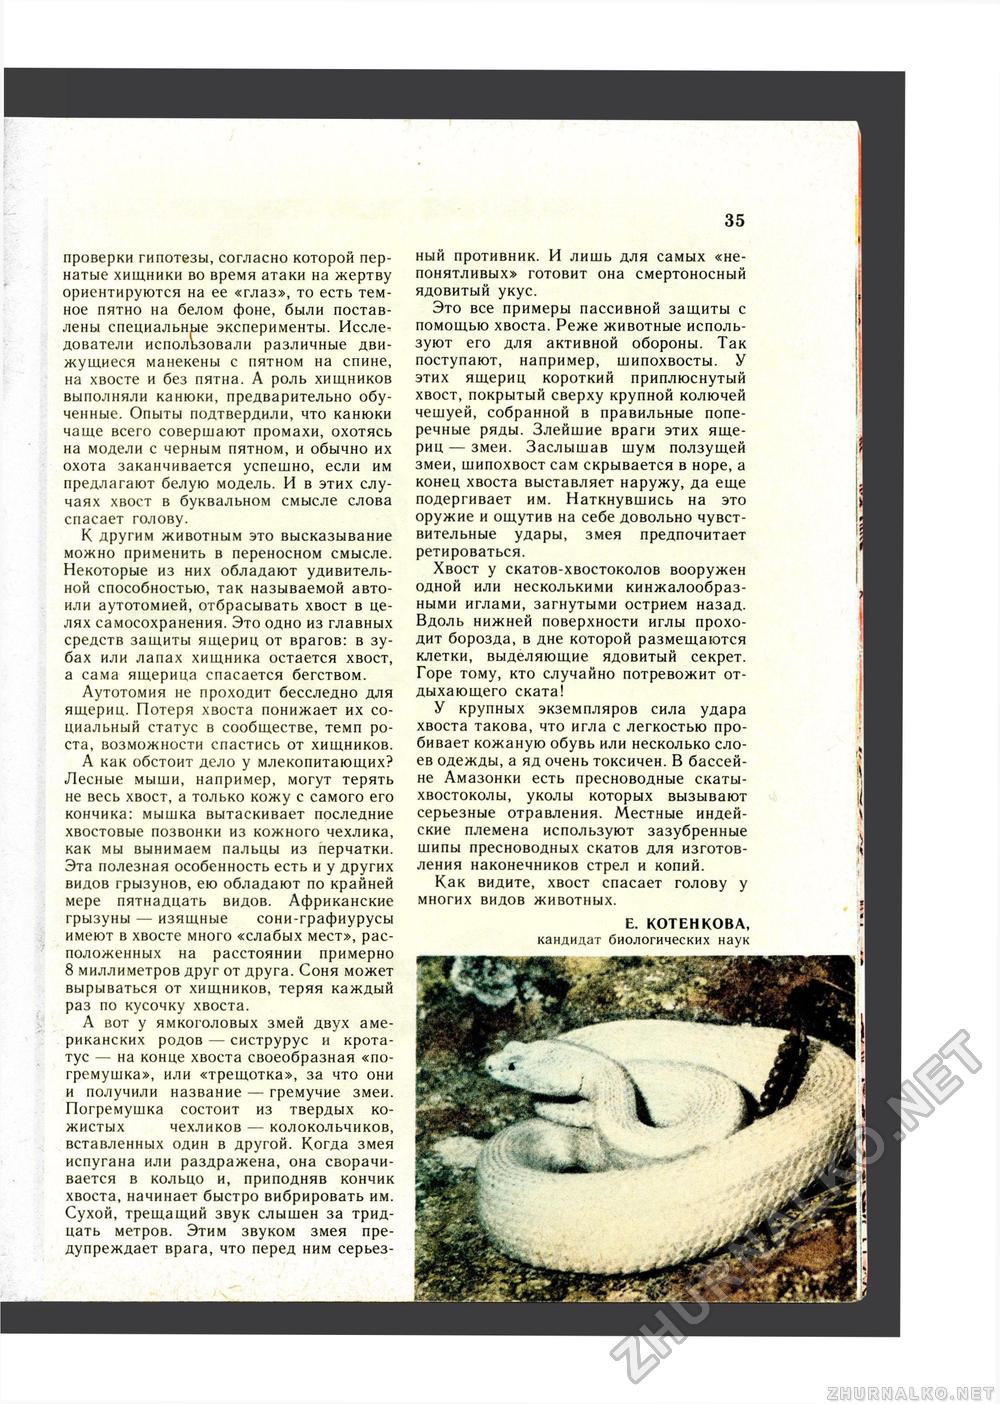 Юный Натуралист 1987-12, страница 36